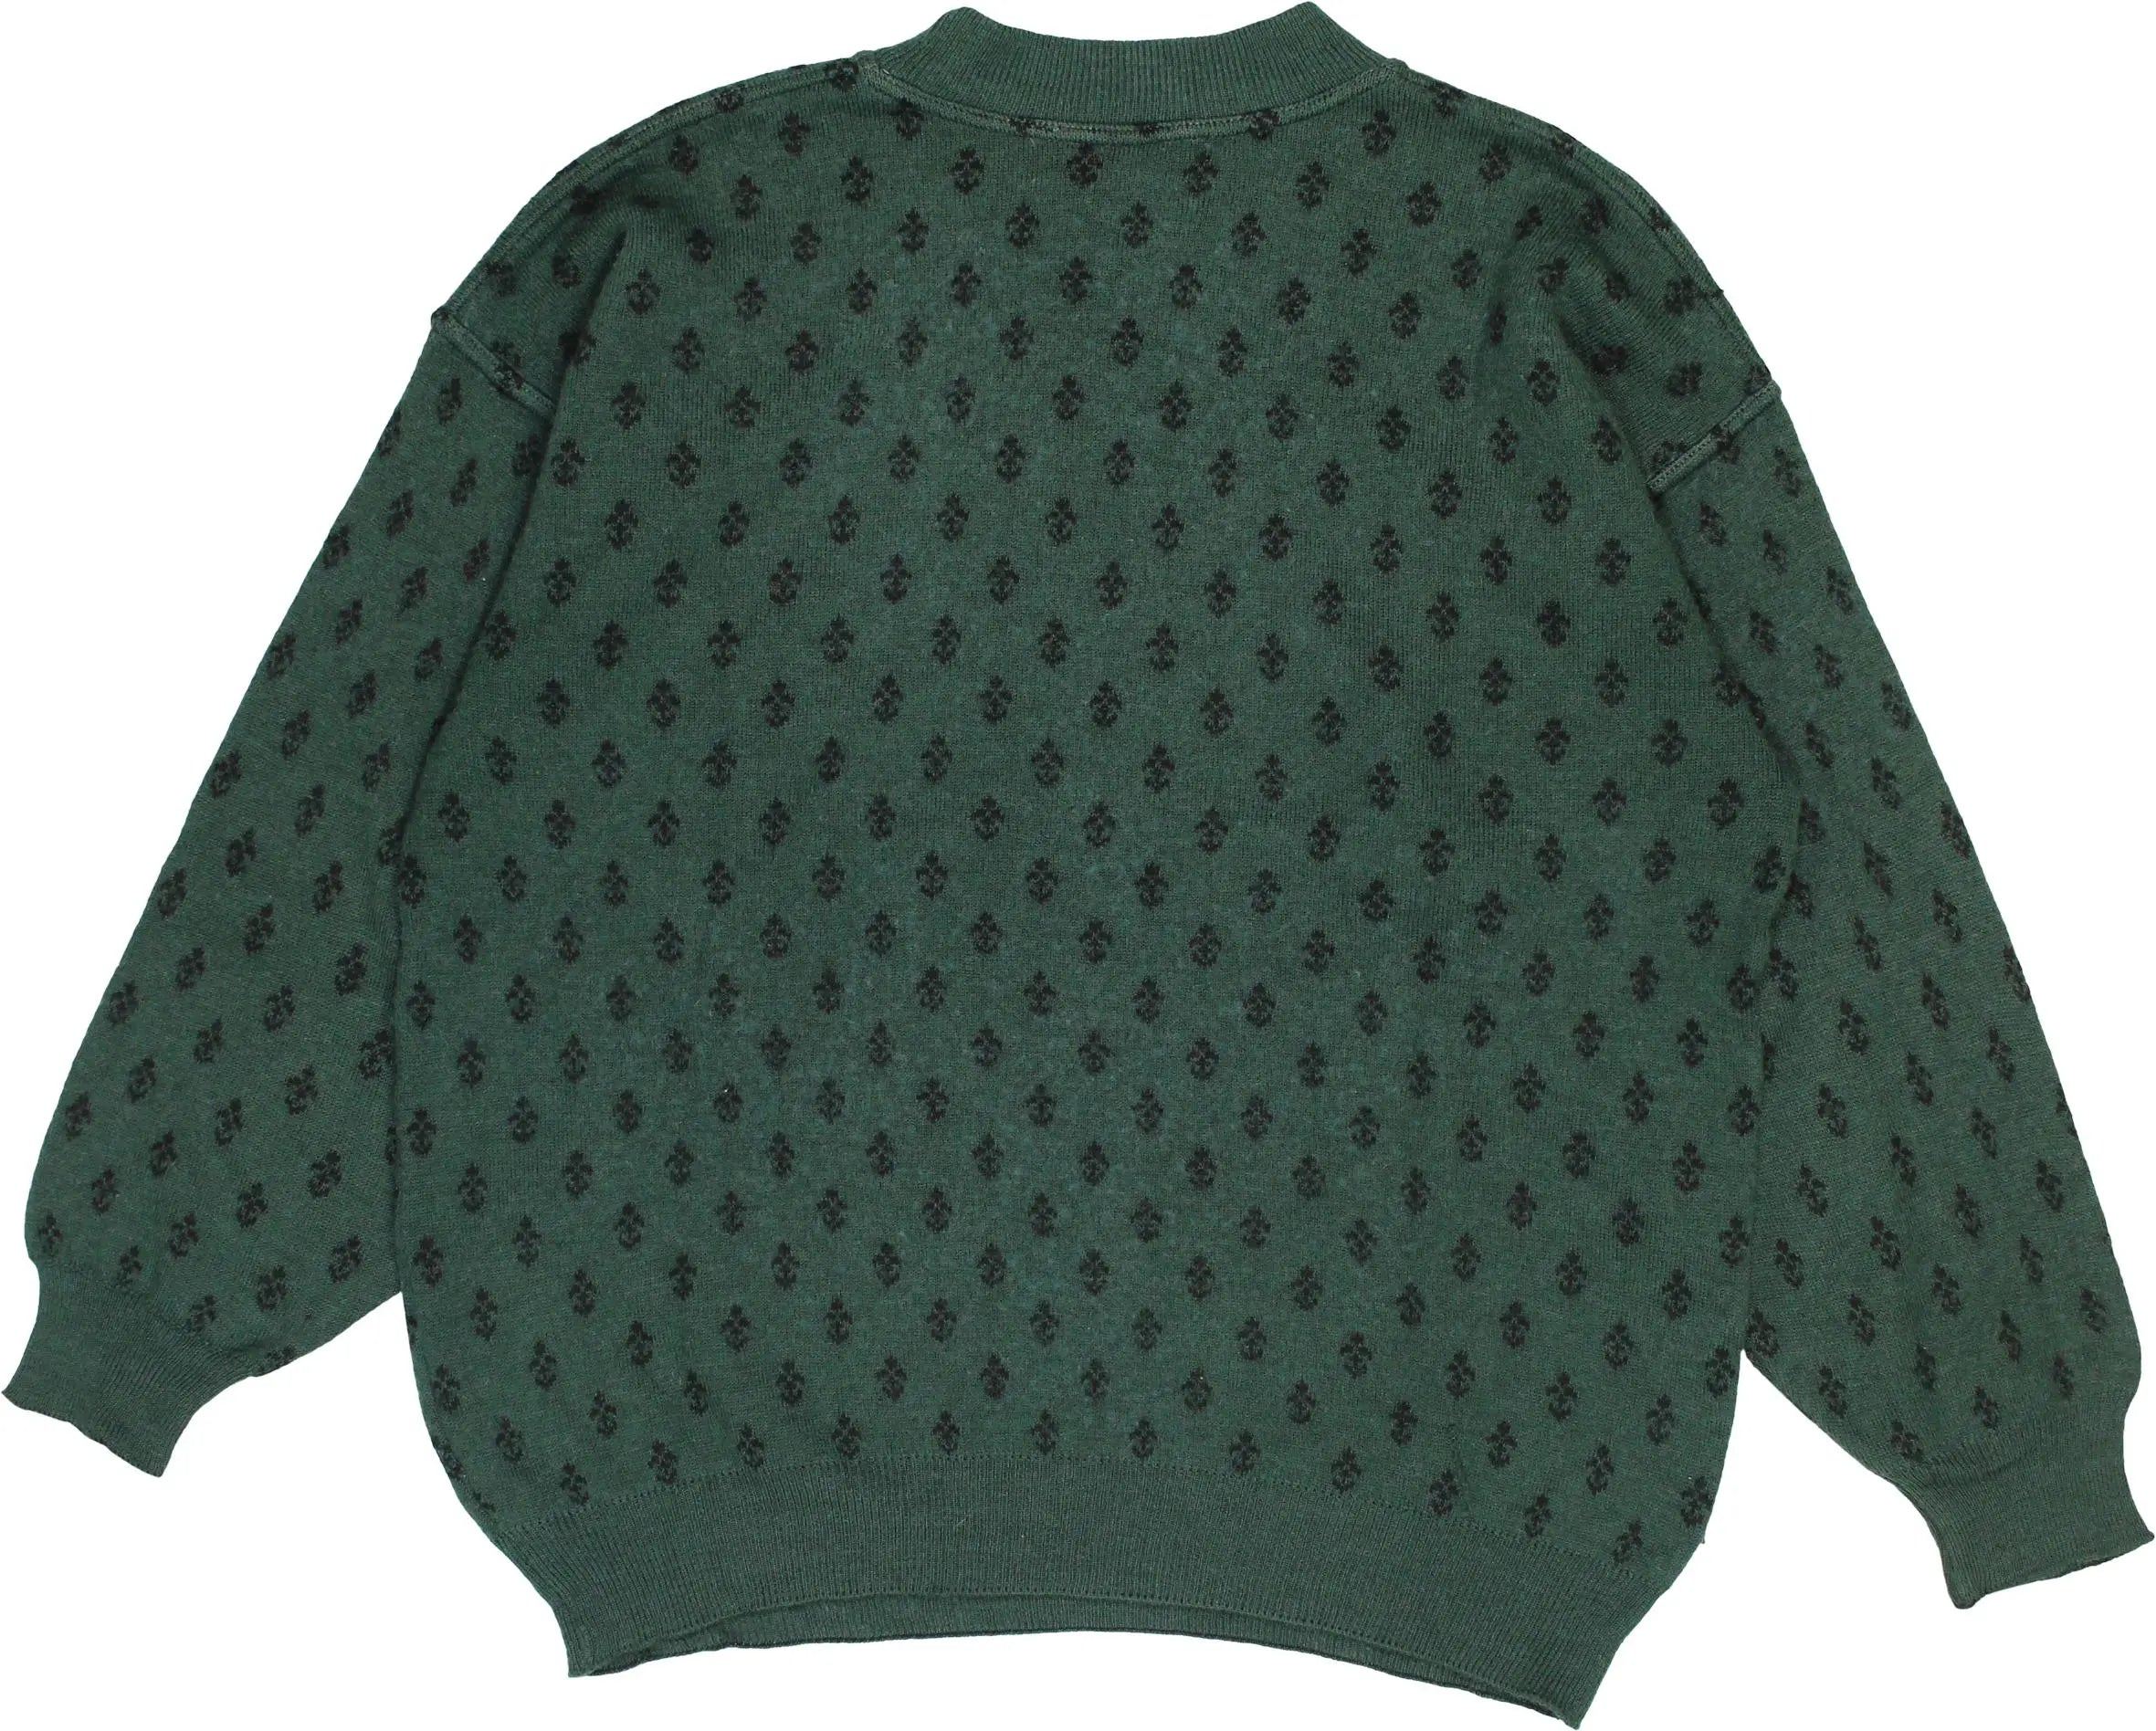 Aldo Bertolini - Green Patterned Jumper- ThriftTale.com - Vintage and second handclothing